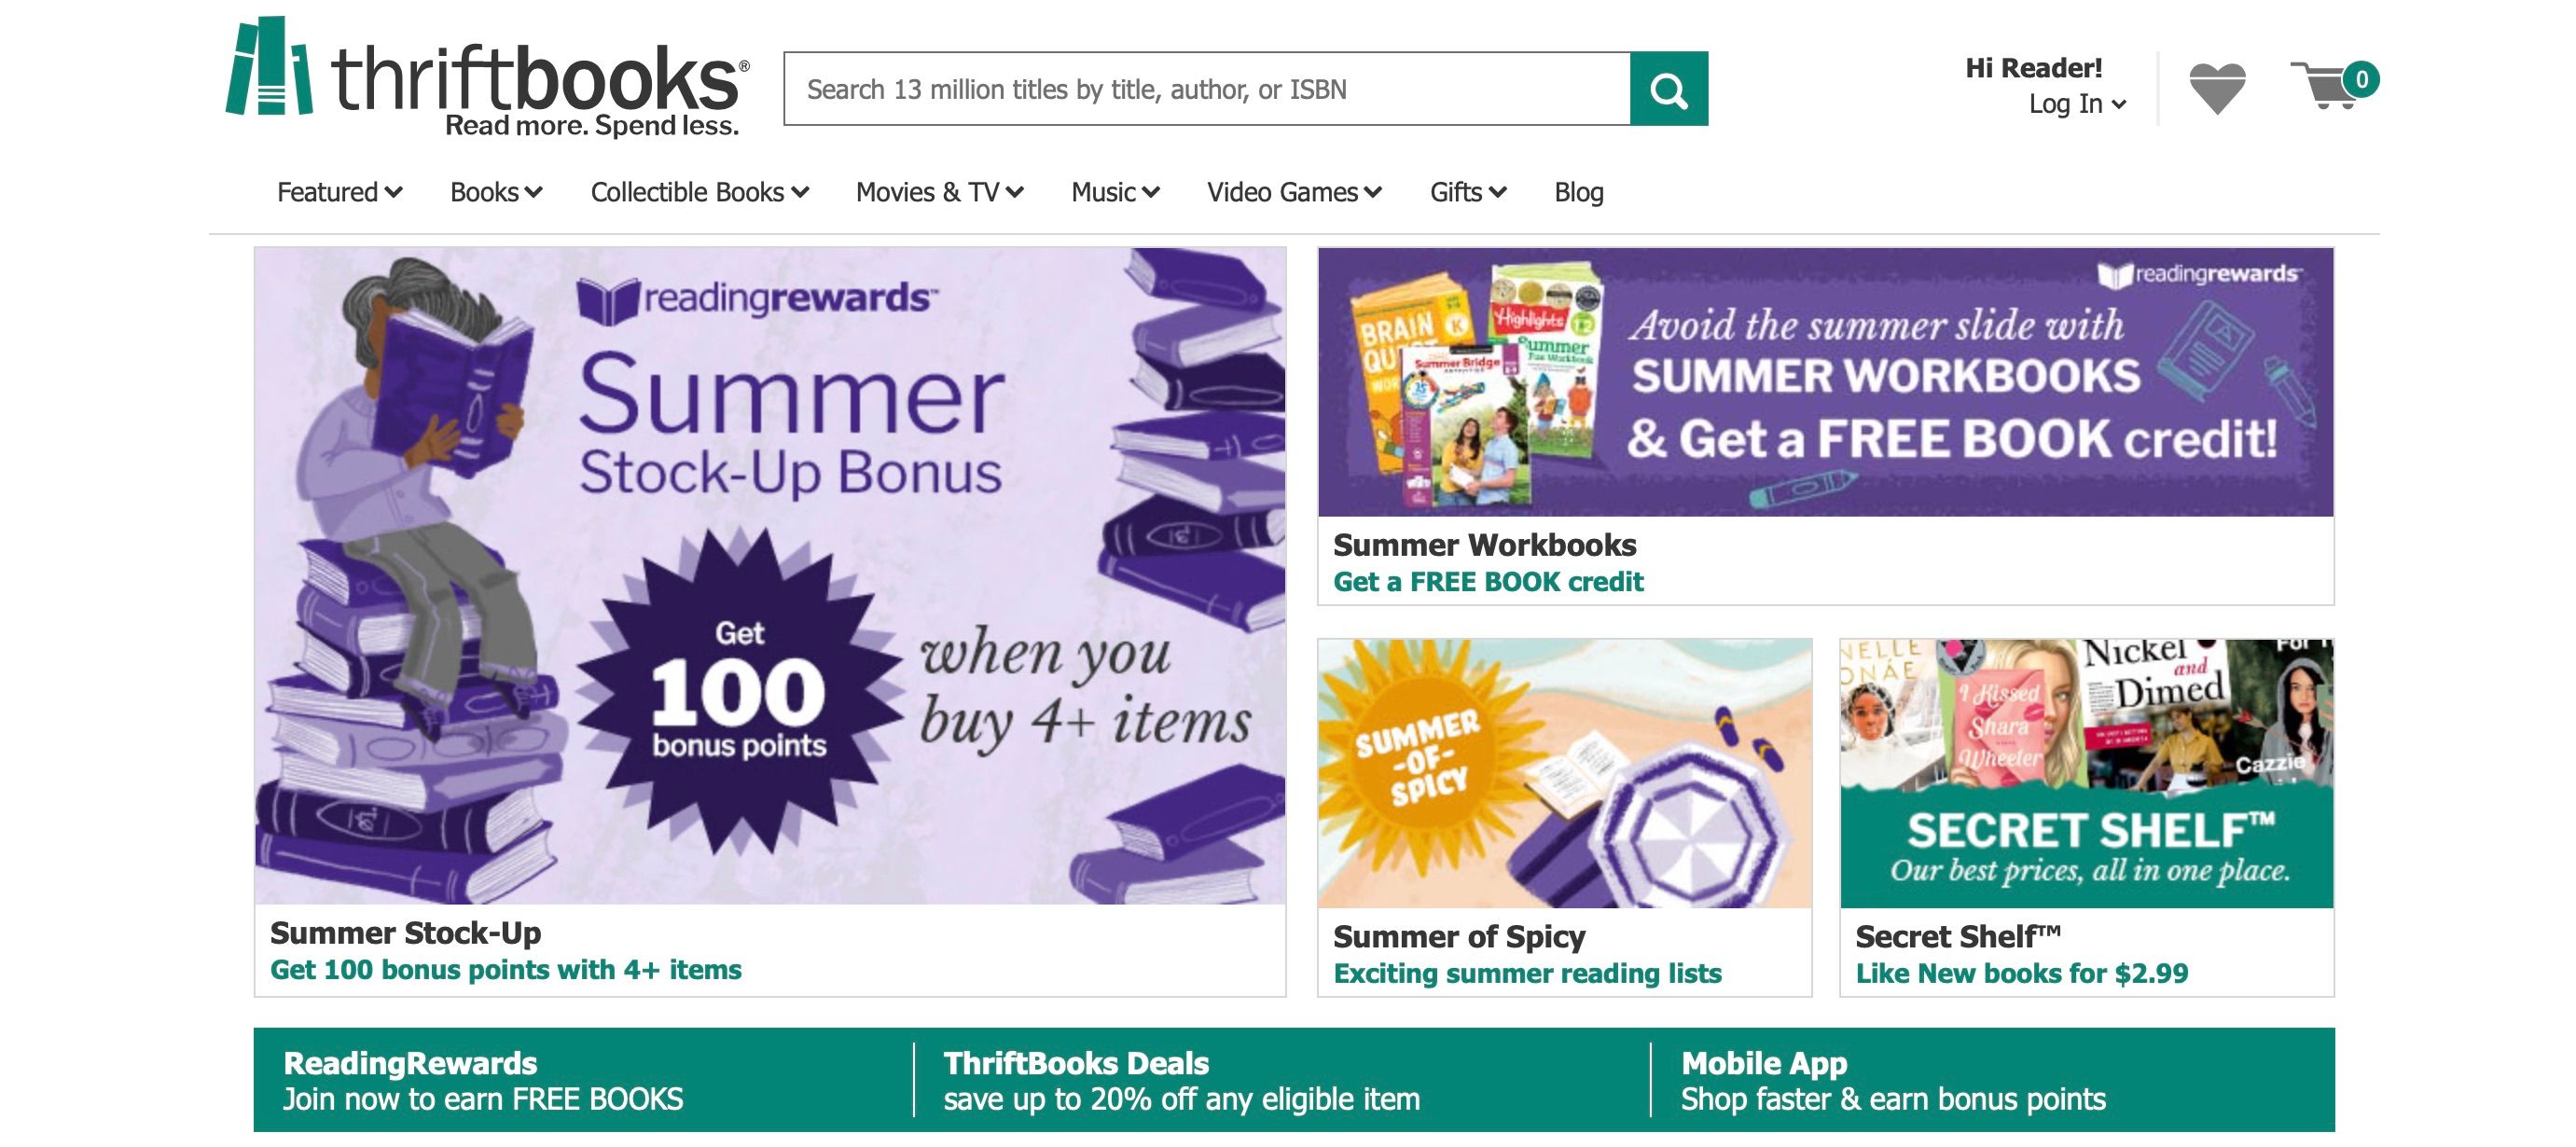 Screenshot of Thriftbooks website home page